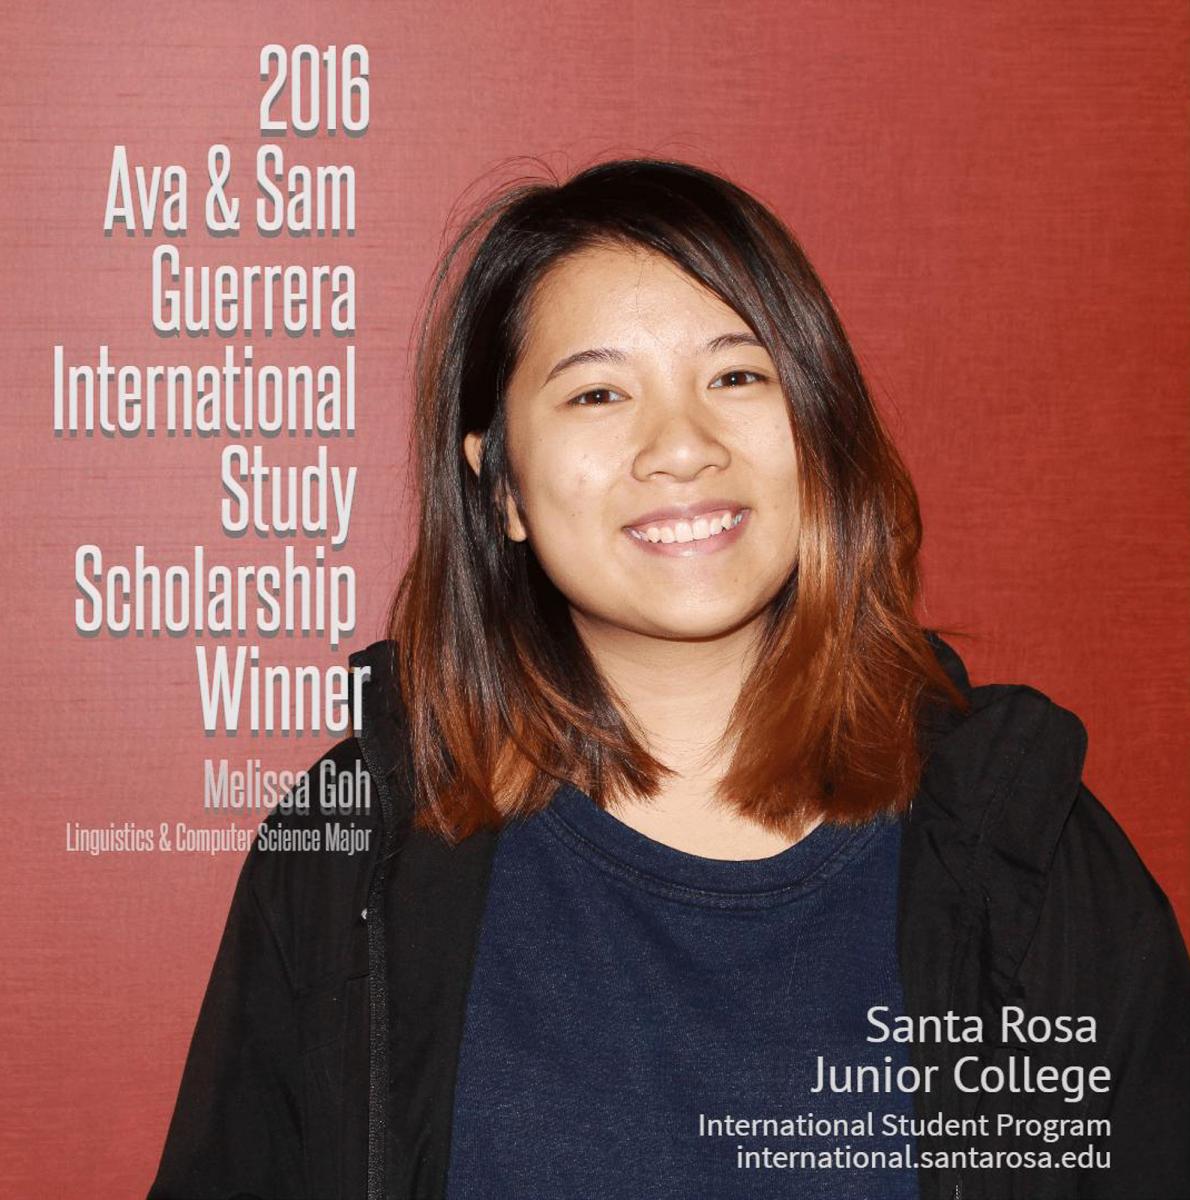 Scholarship winner Melissa Goh